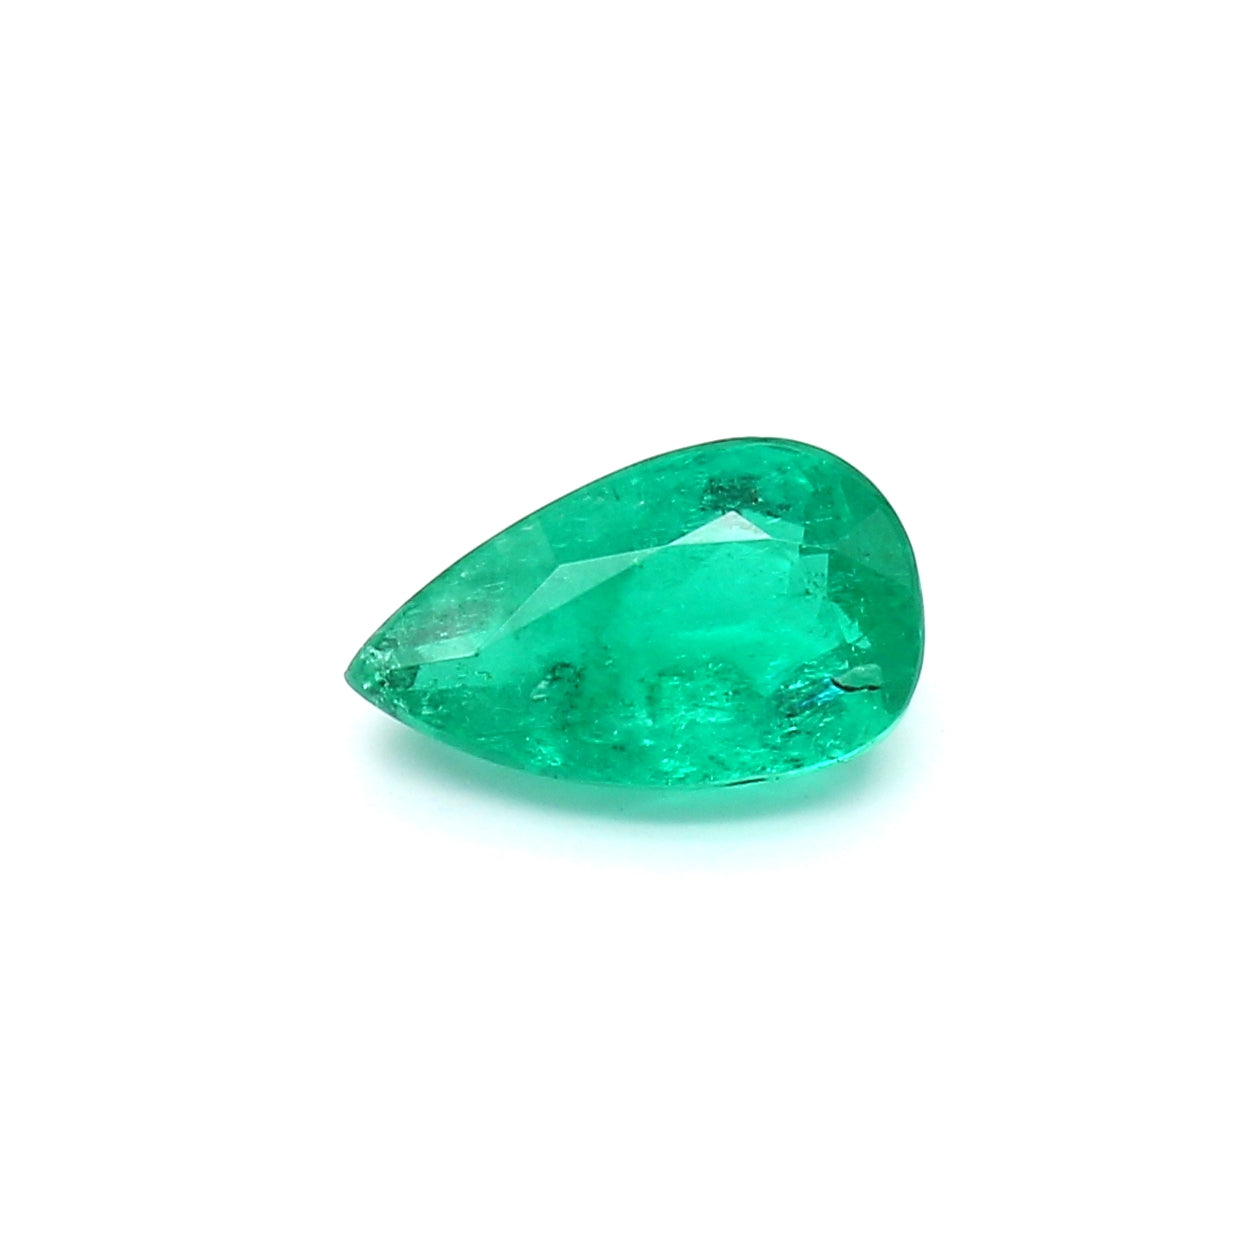 1.80ct Pear Shape Emerald, Minor Oil, Colombia - 10.16 x 5.93 x 4.87mm